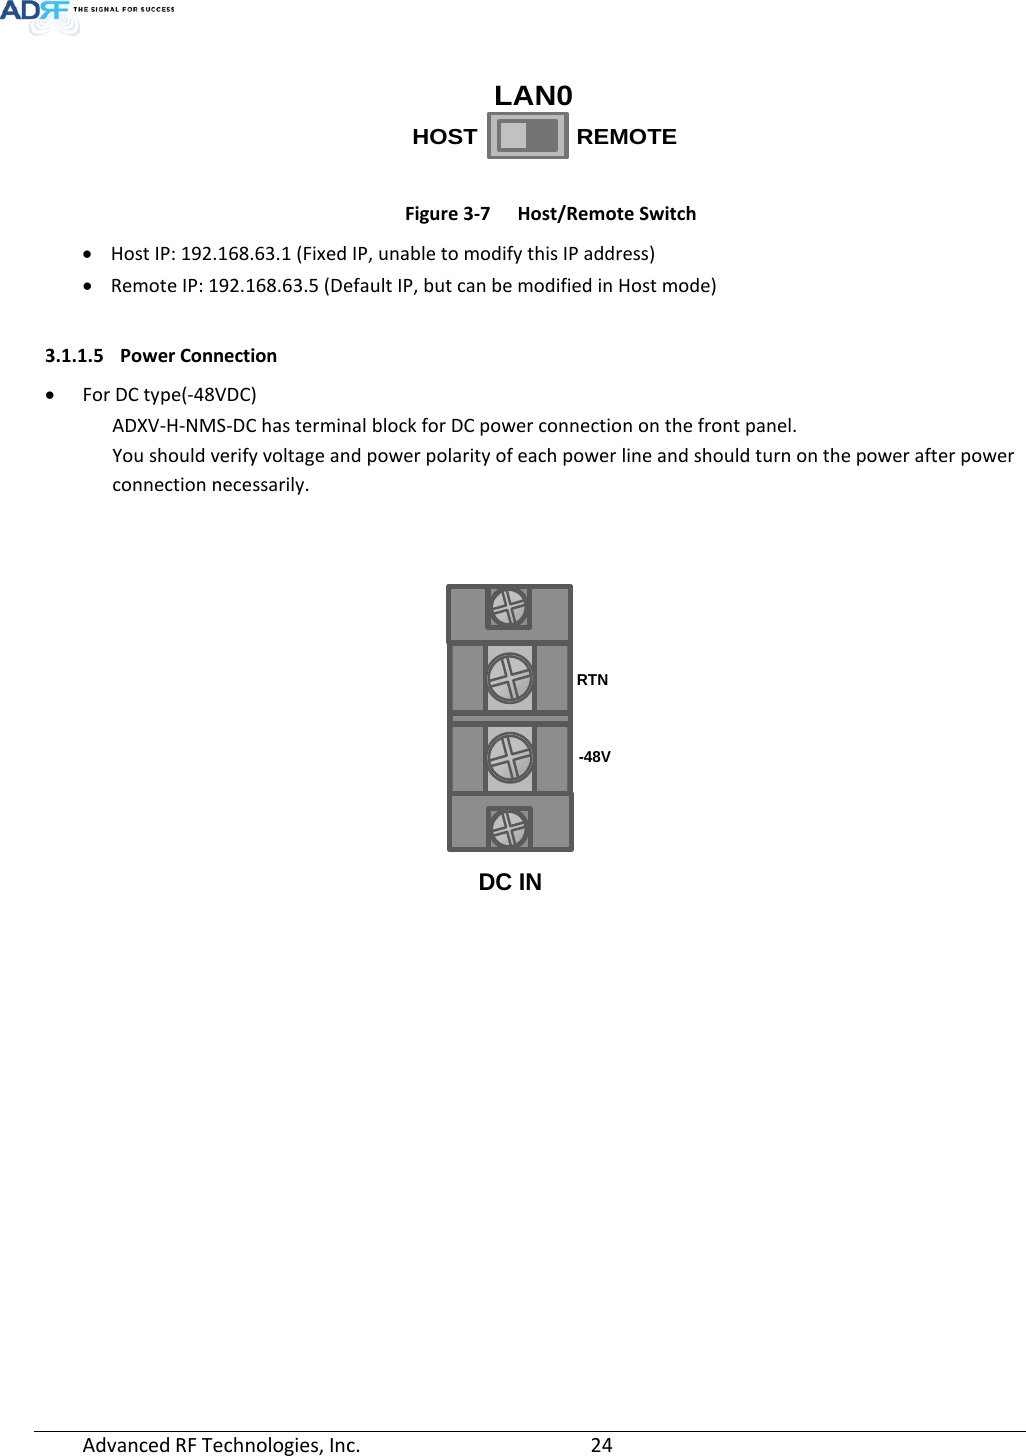 Page 24 of ADRF KOREA ADXV-R-336 DAS (Distributed Antenna System) User Manual ADXV DAS